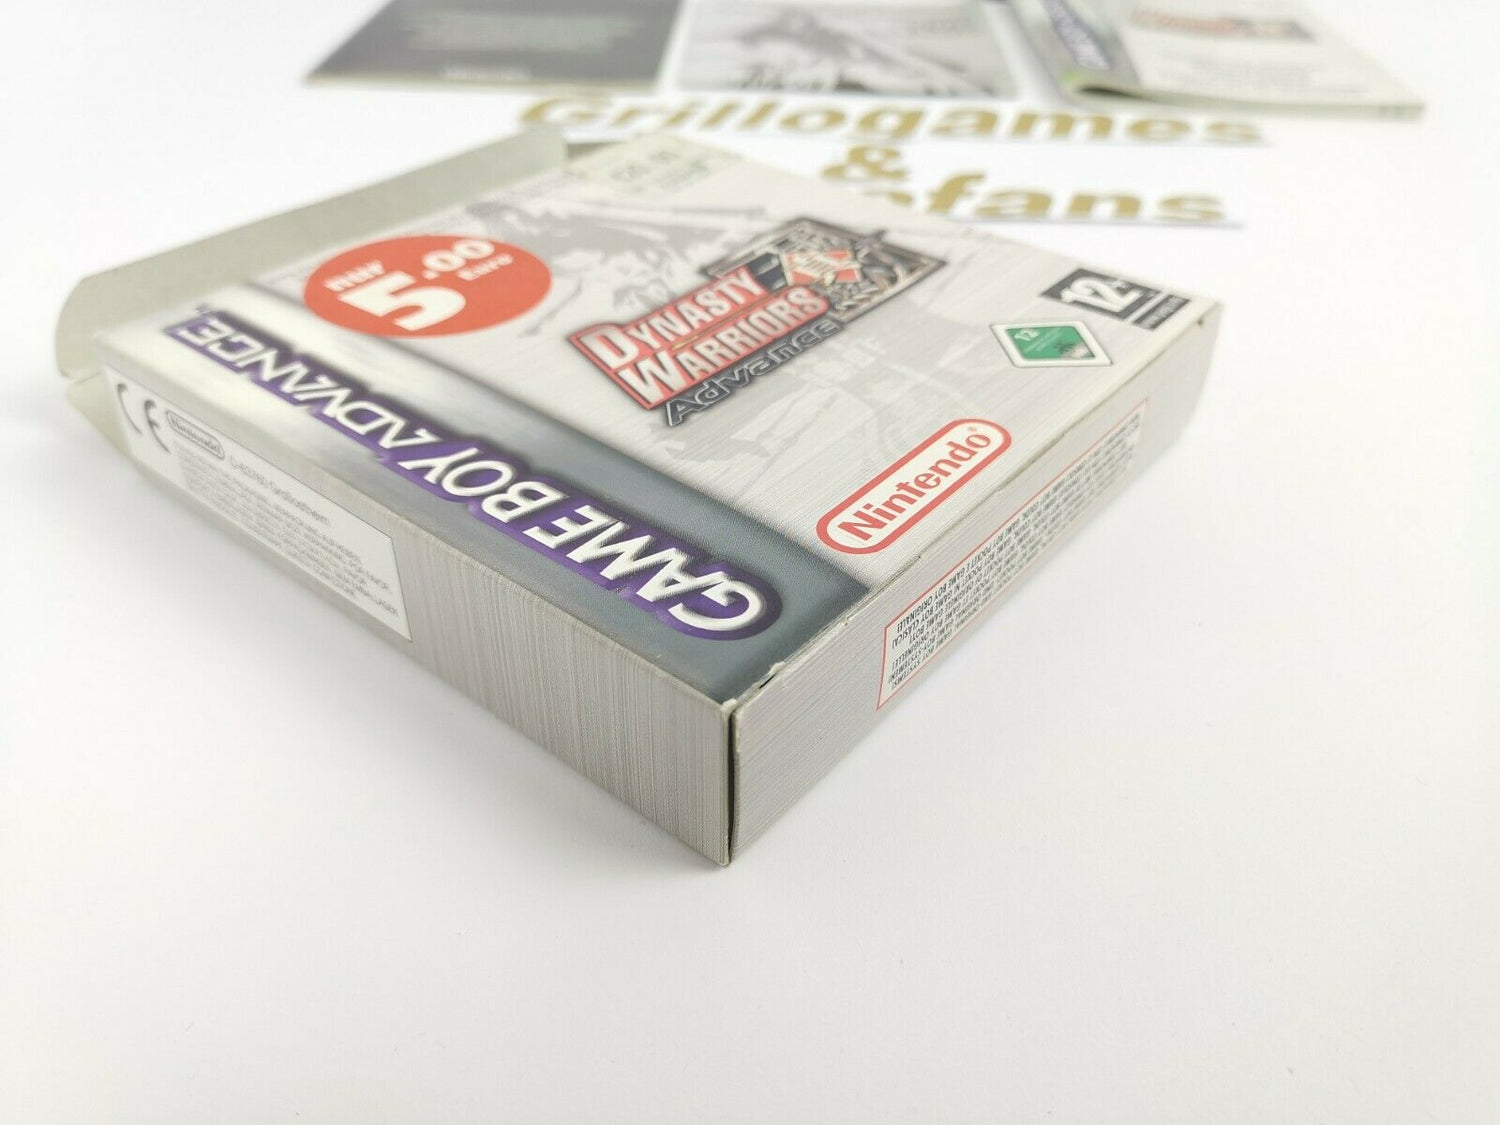 Nintendo Gameboy Advance 